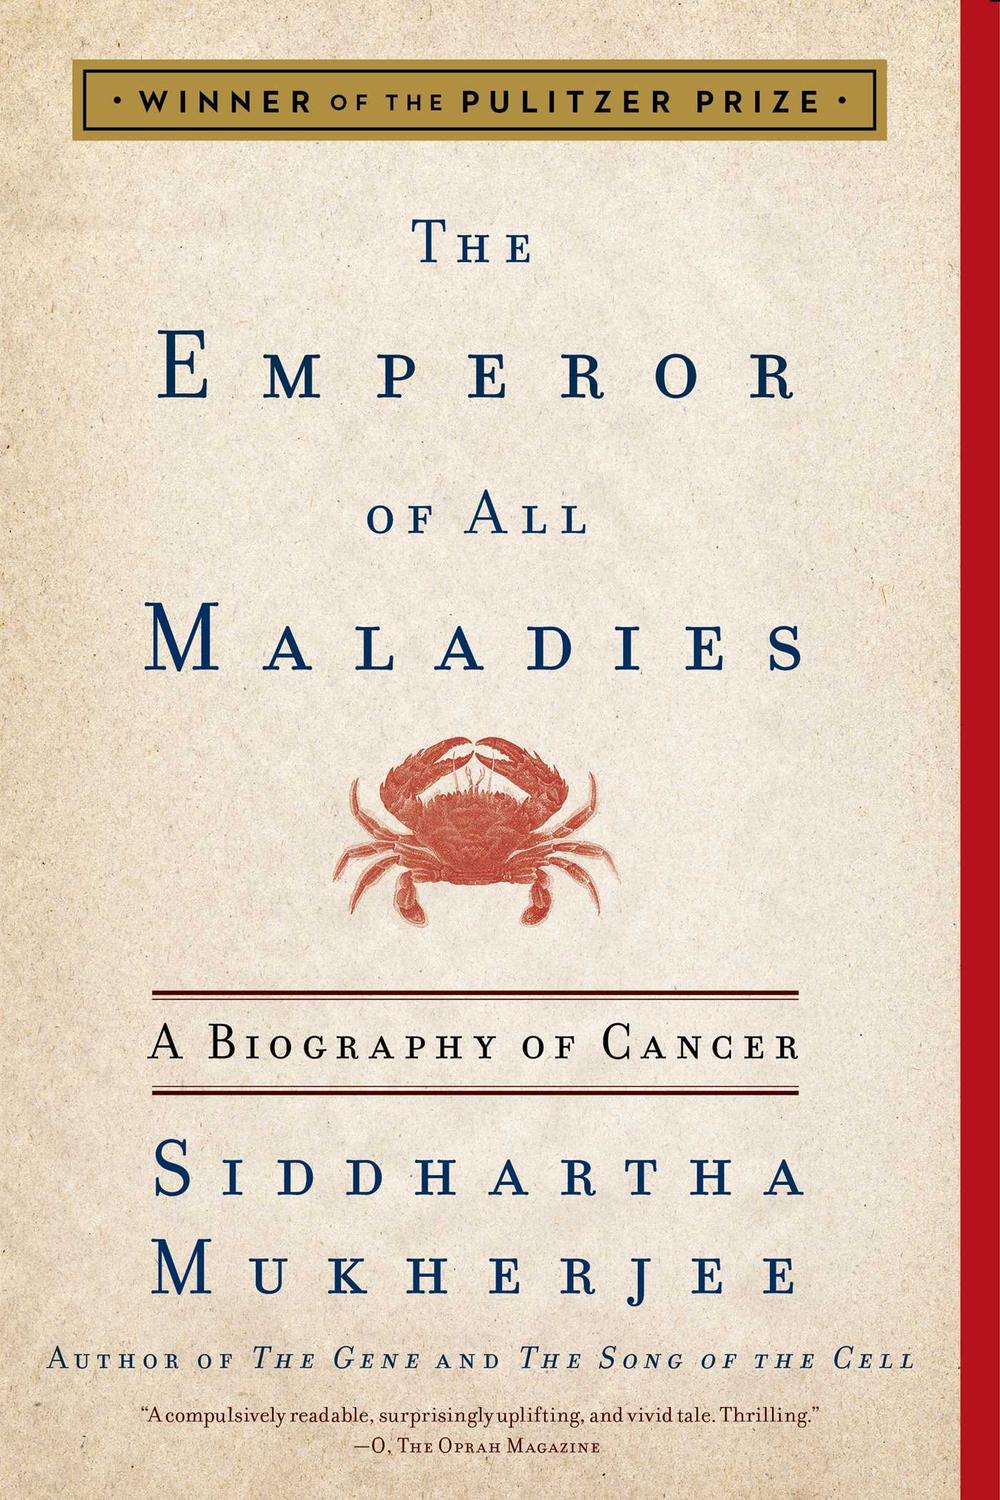 The Emperor of All Maladies - Siddhartha Mukherjee